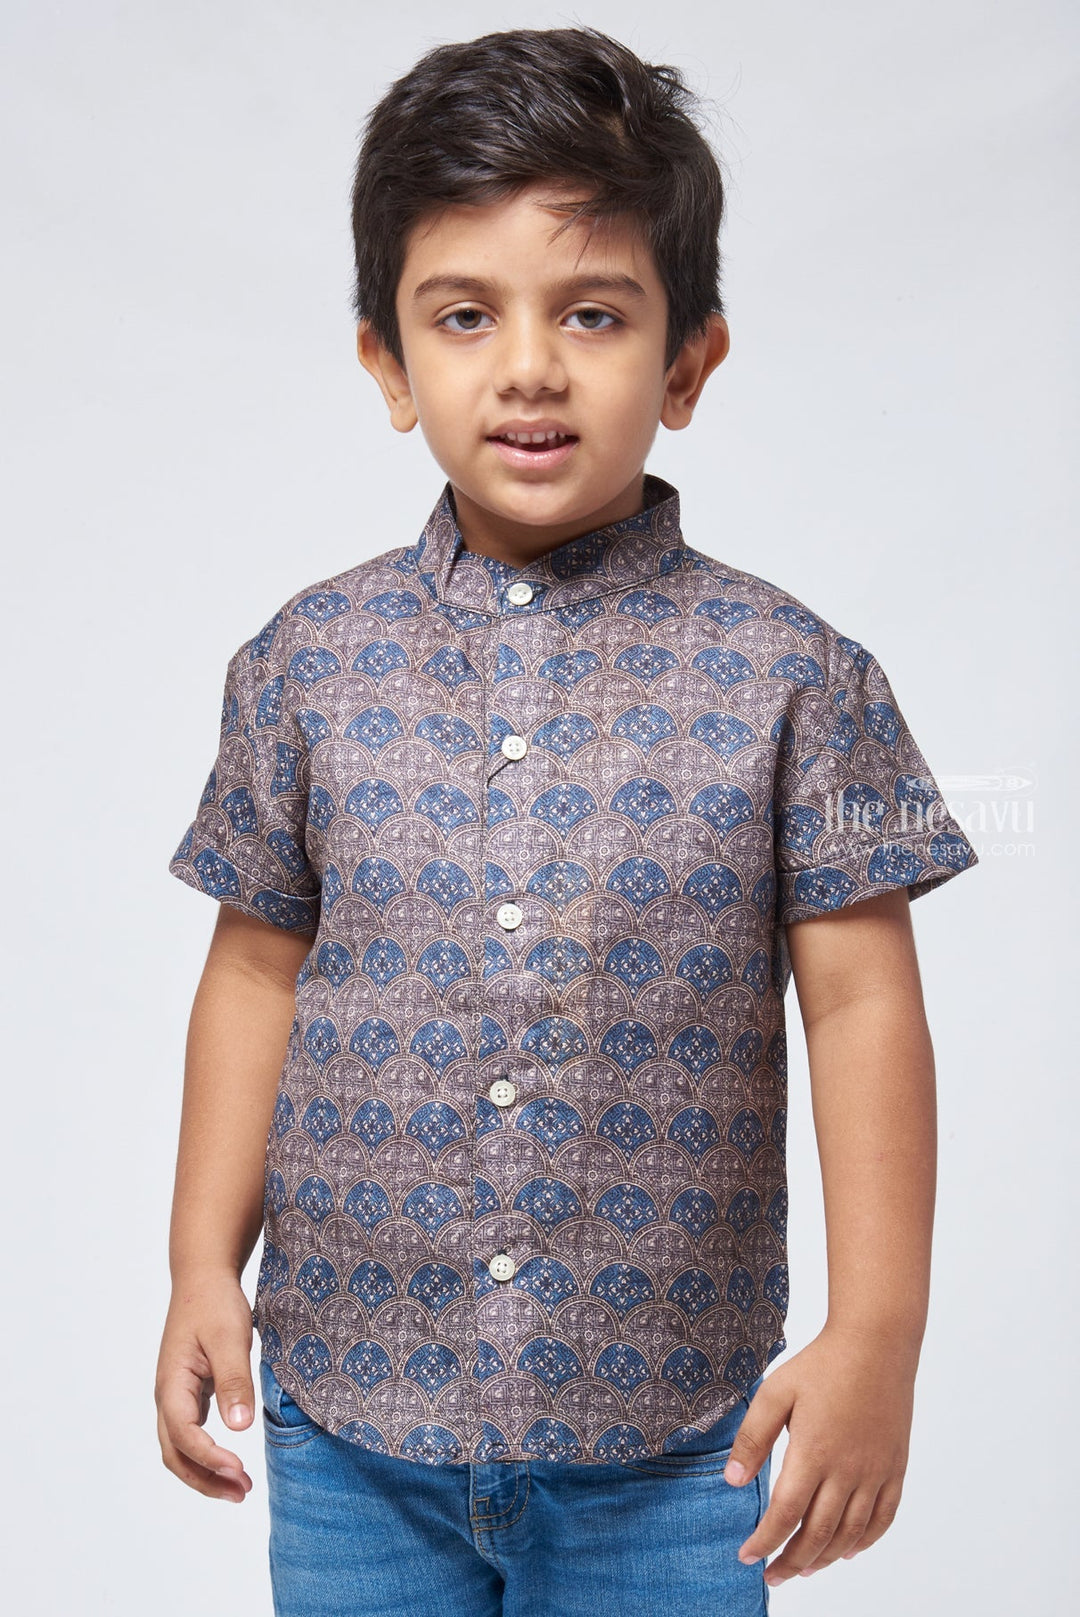 The Nesavu Boys Linen Shirt Rustic Radiance Boys Authentic Shirt with Traditional Touch Nesavu 14 (6M) / Brown / Linen BS080C-14 Latest Boys Shirt Design | Buy Premium Boys Shirts | The Nesavu